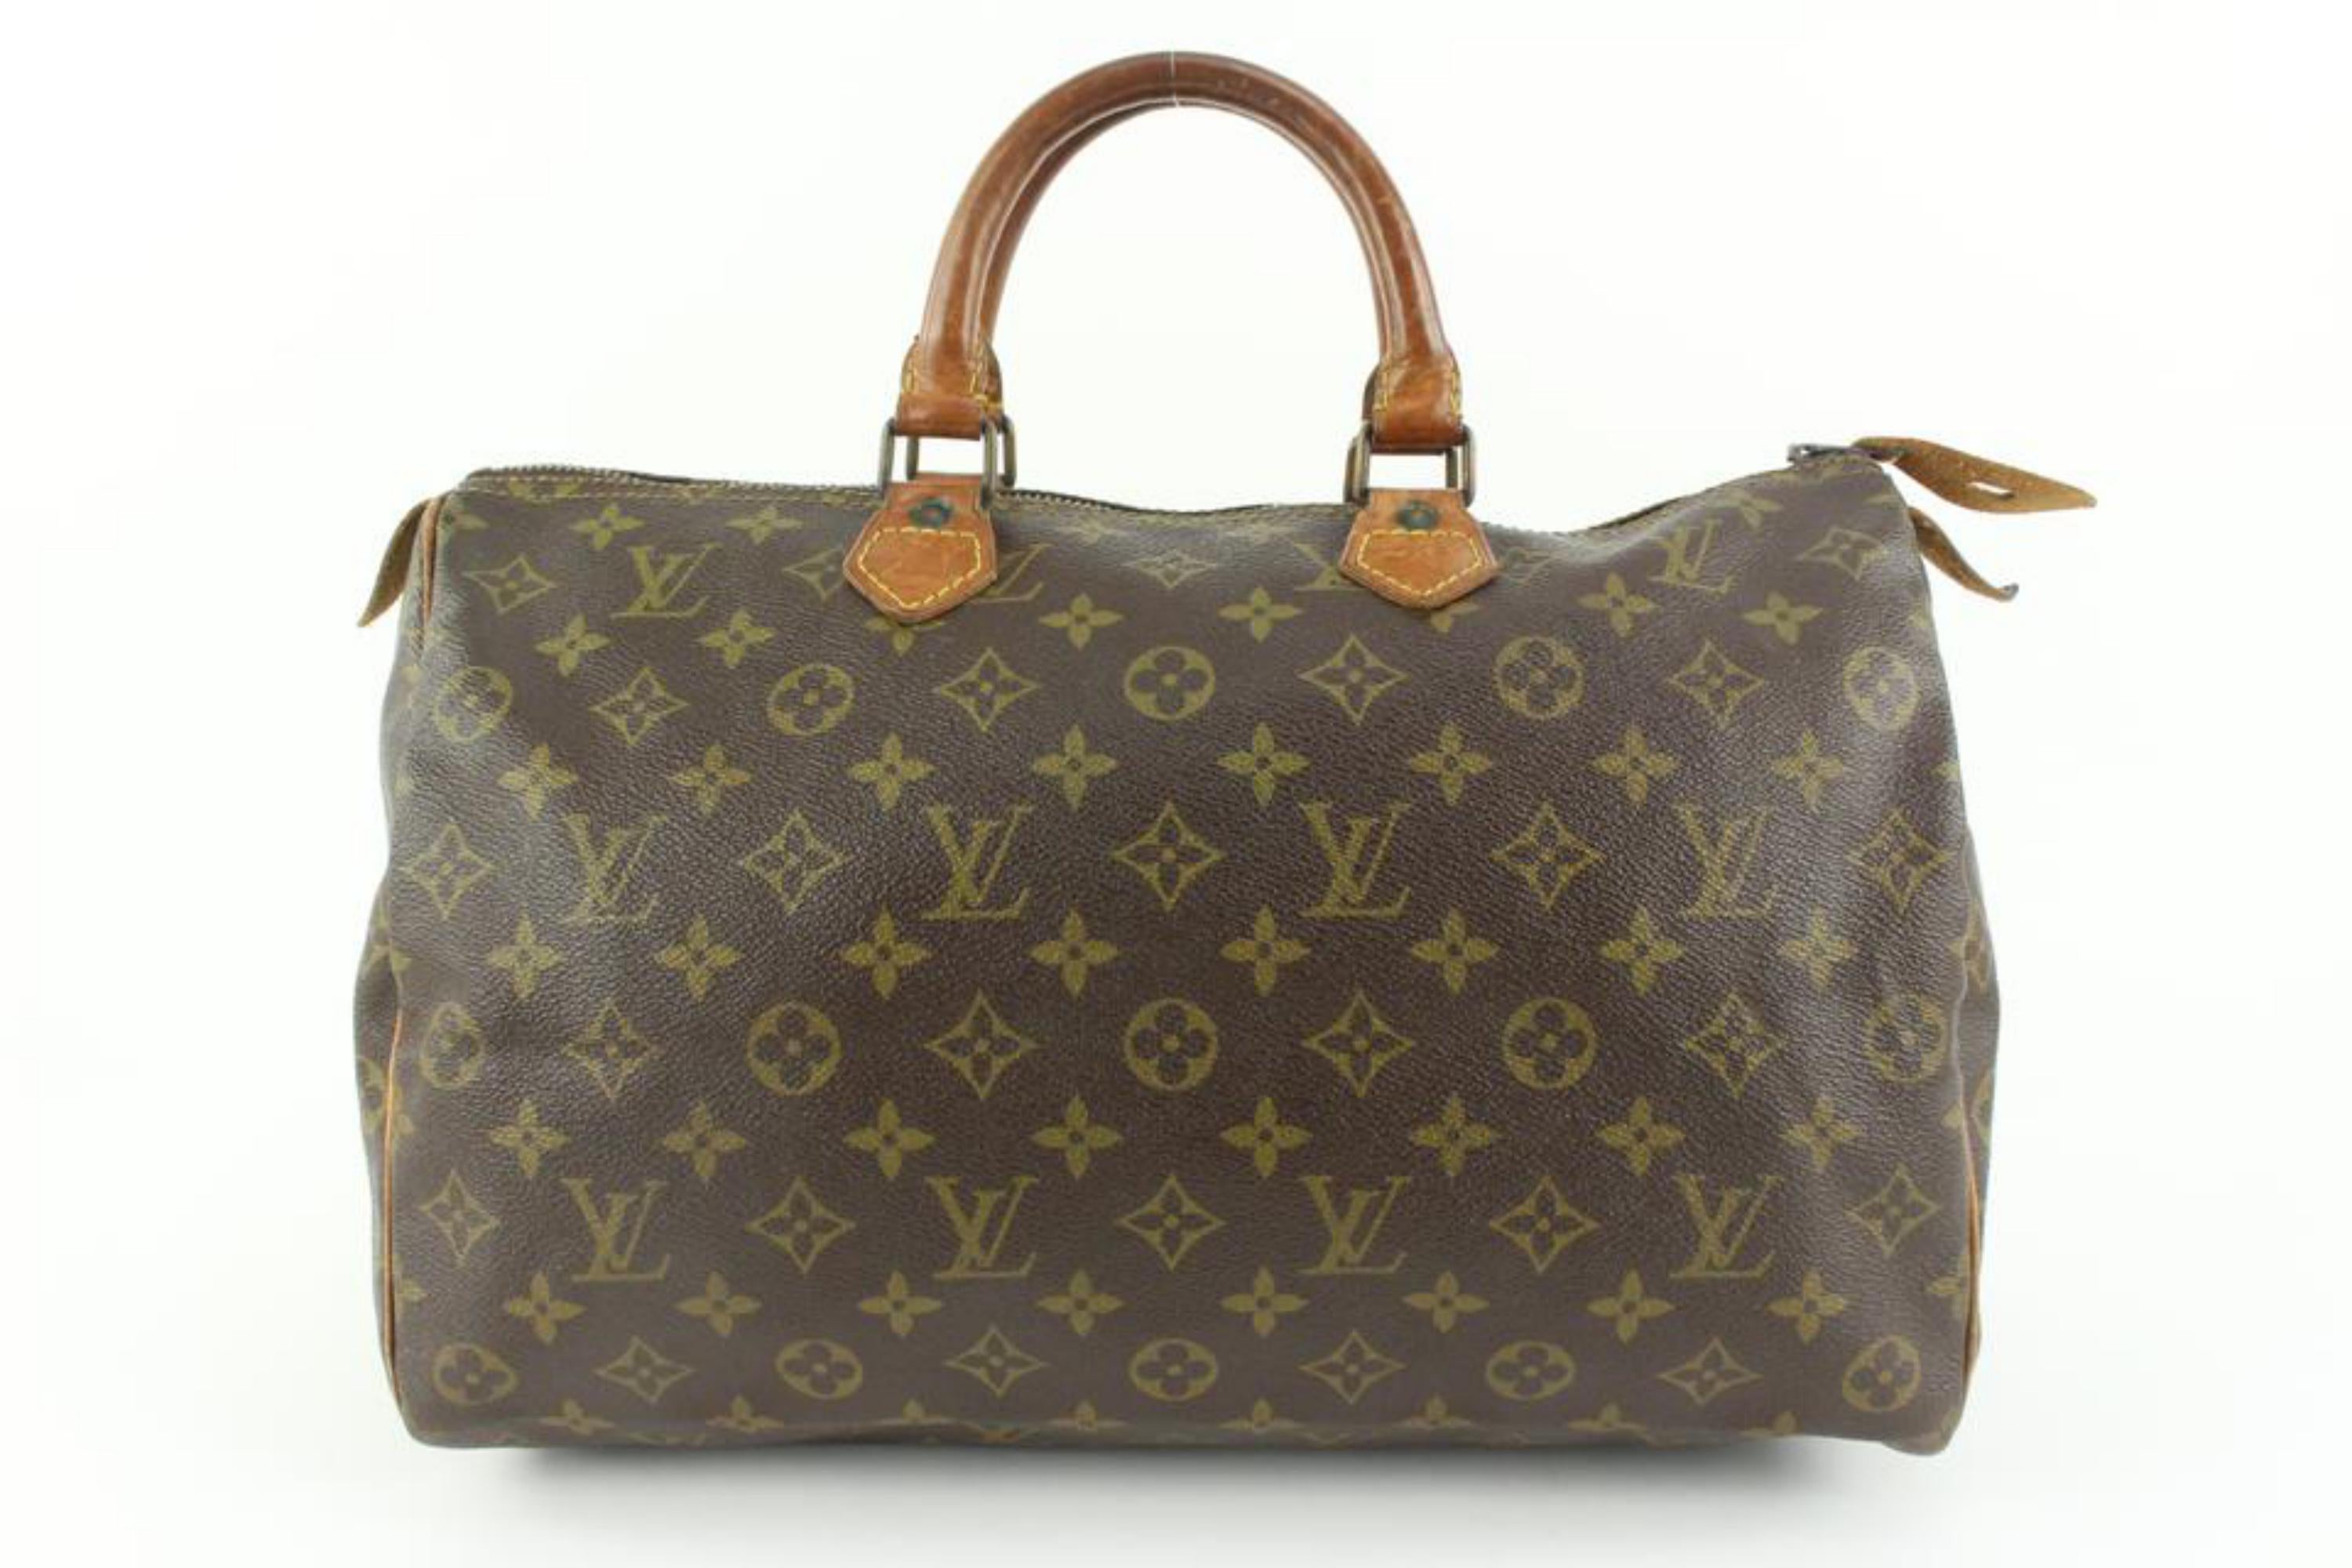 Louis Vuitton Monogram Speedy 35 Boston Bag 1230lv1 In Fair Condition For Sale In Dix hills, NY